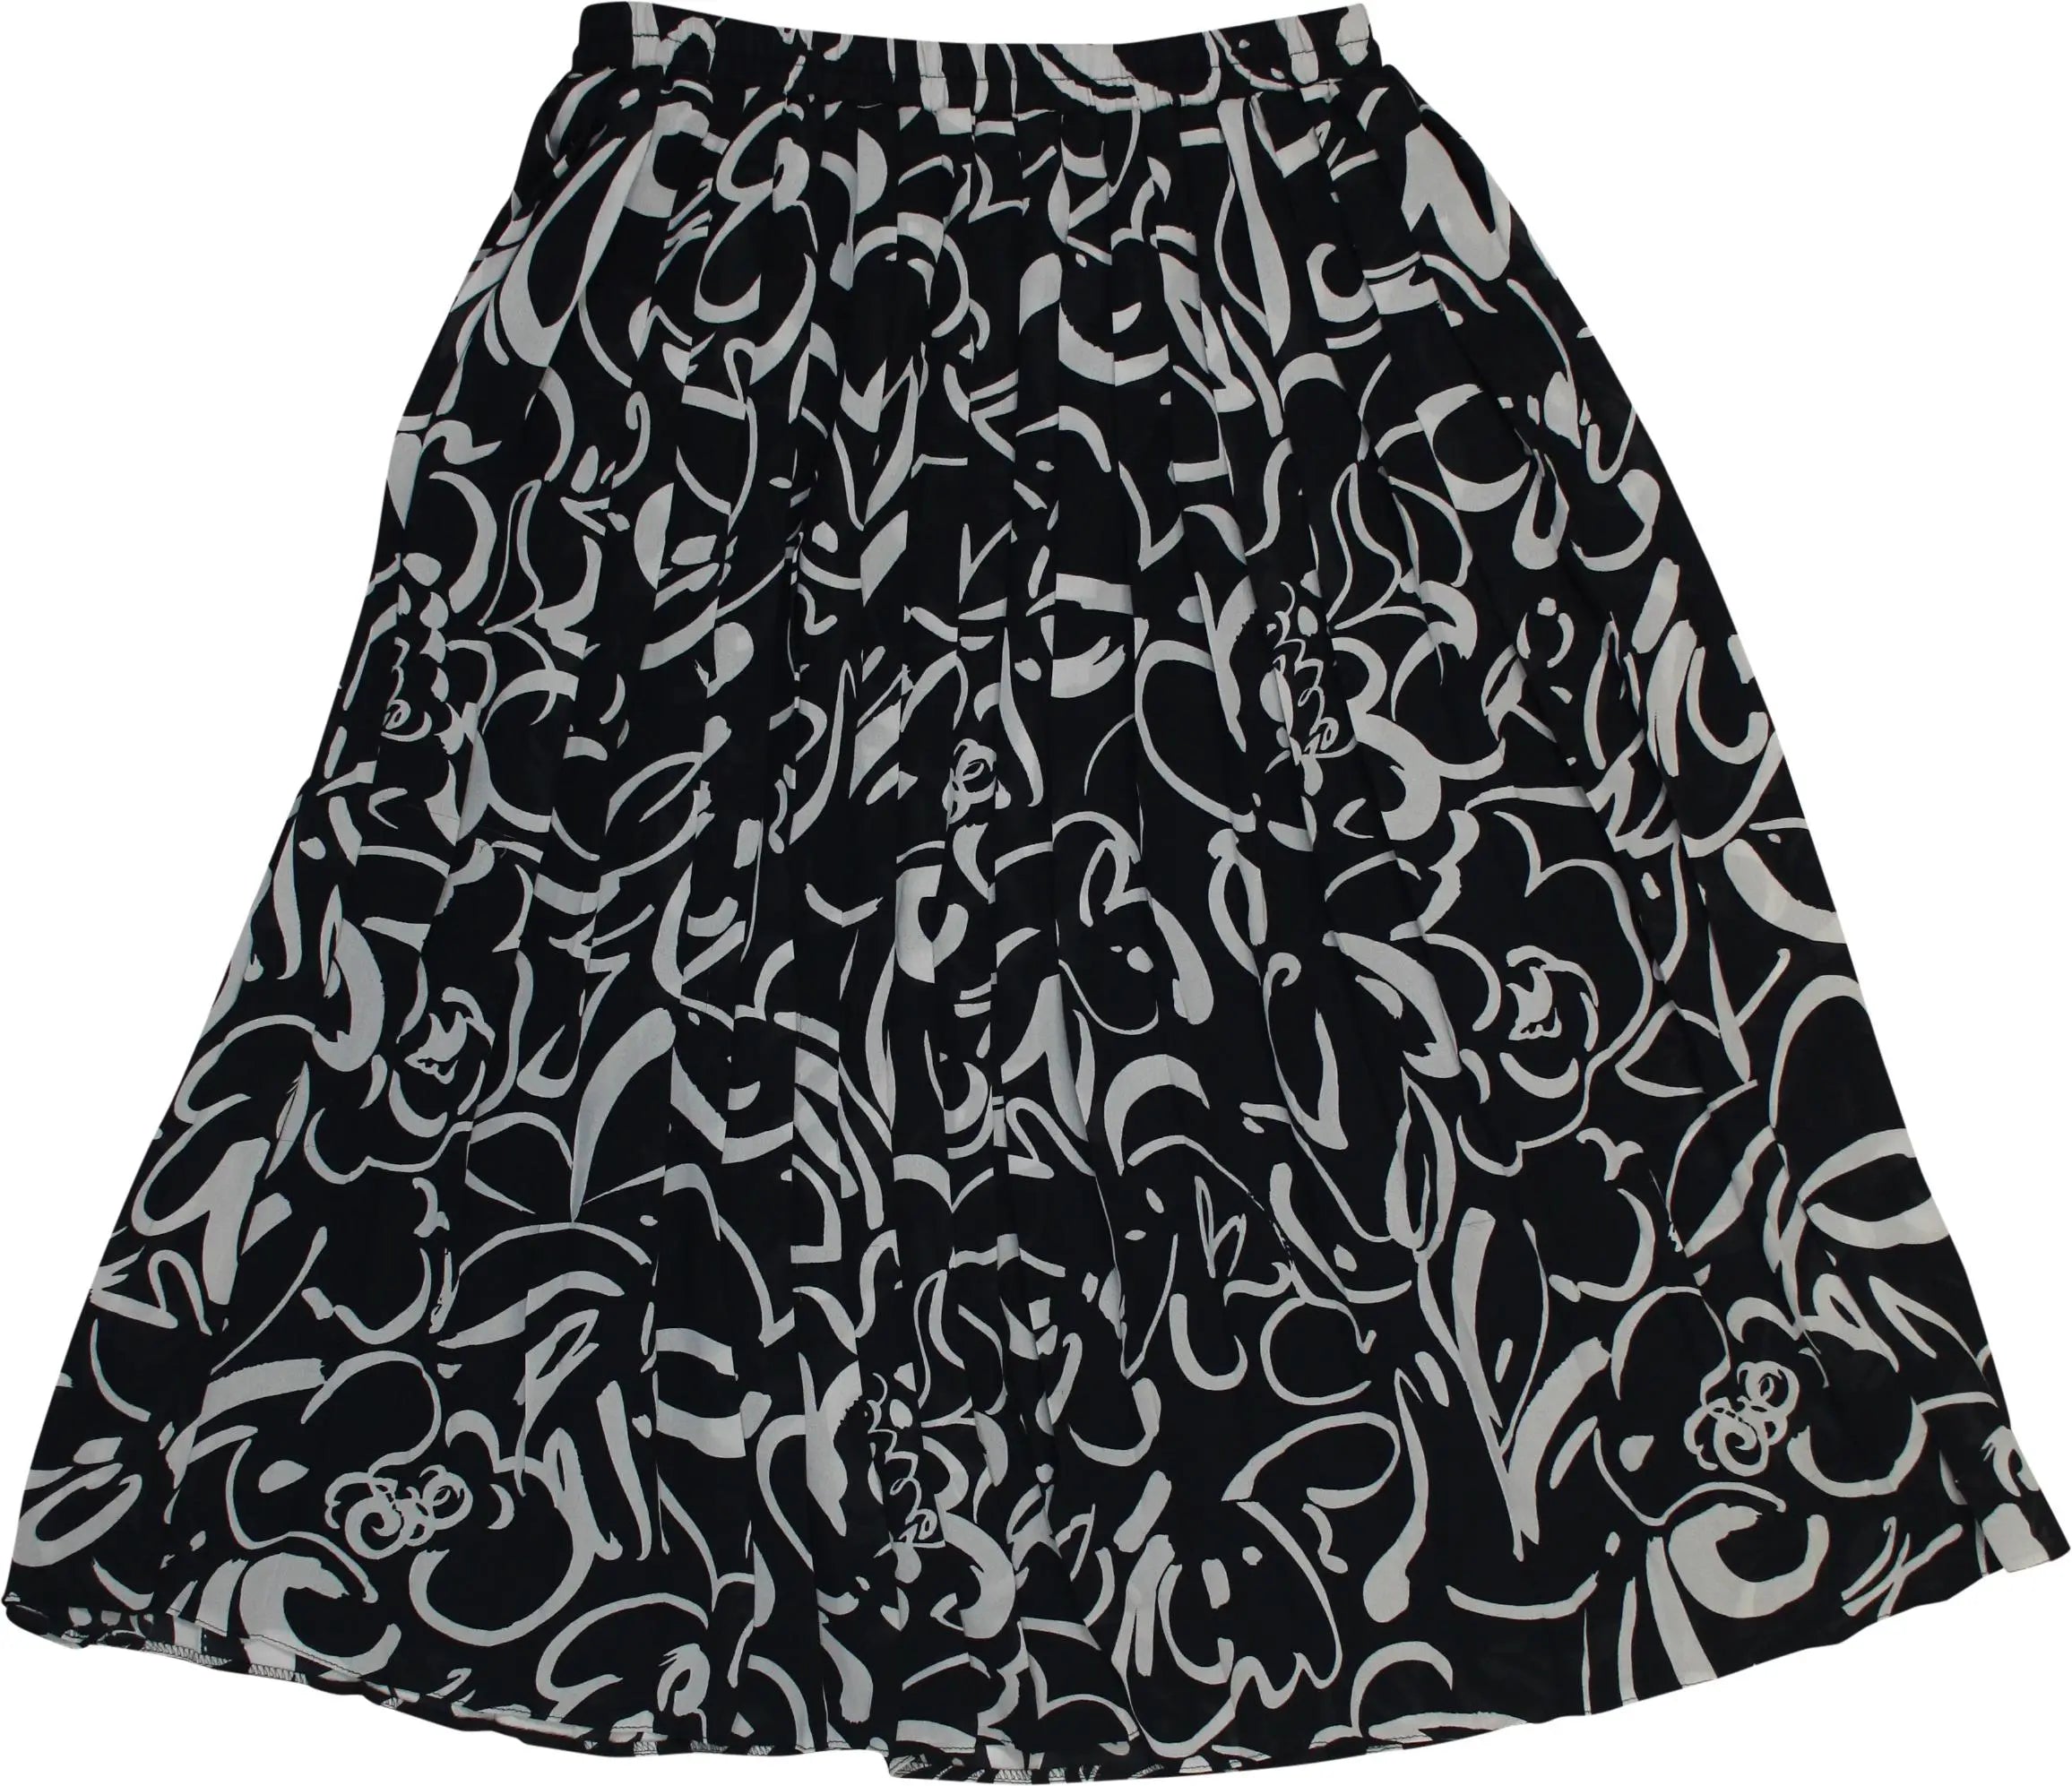 Frankenwälder - 80s Pleated Skirt- ThriftTale.com - Vintage and second handclothing